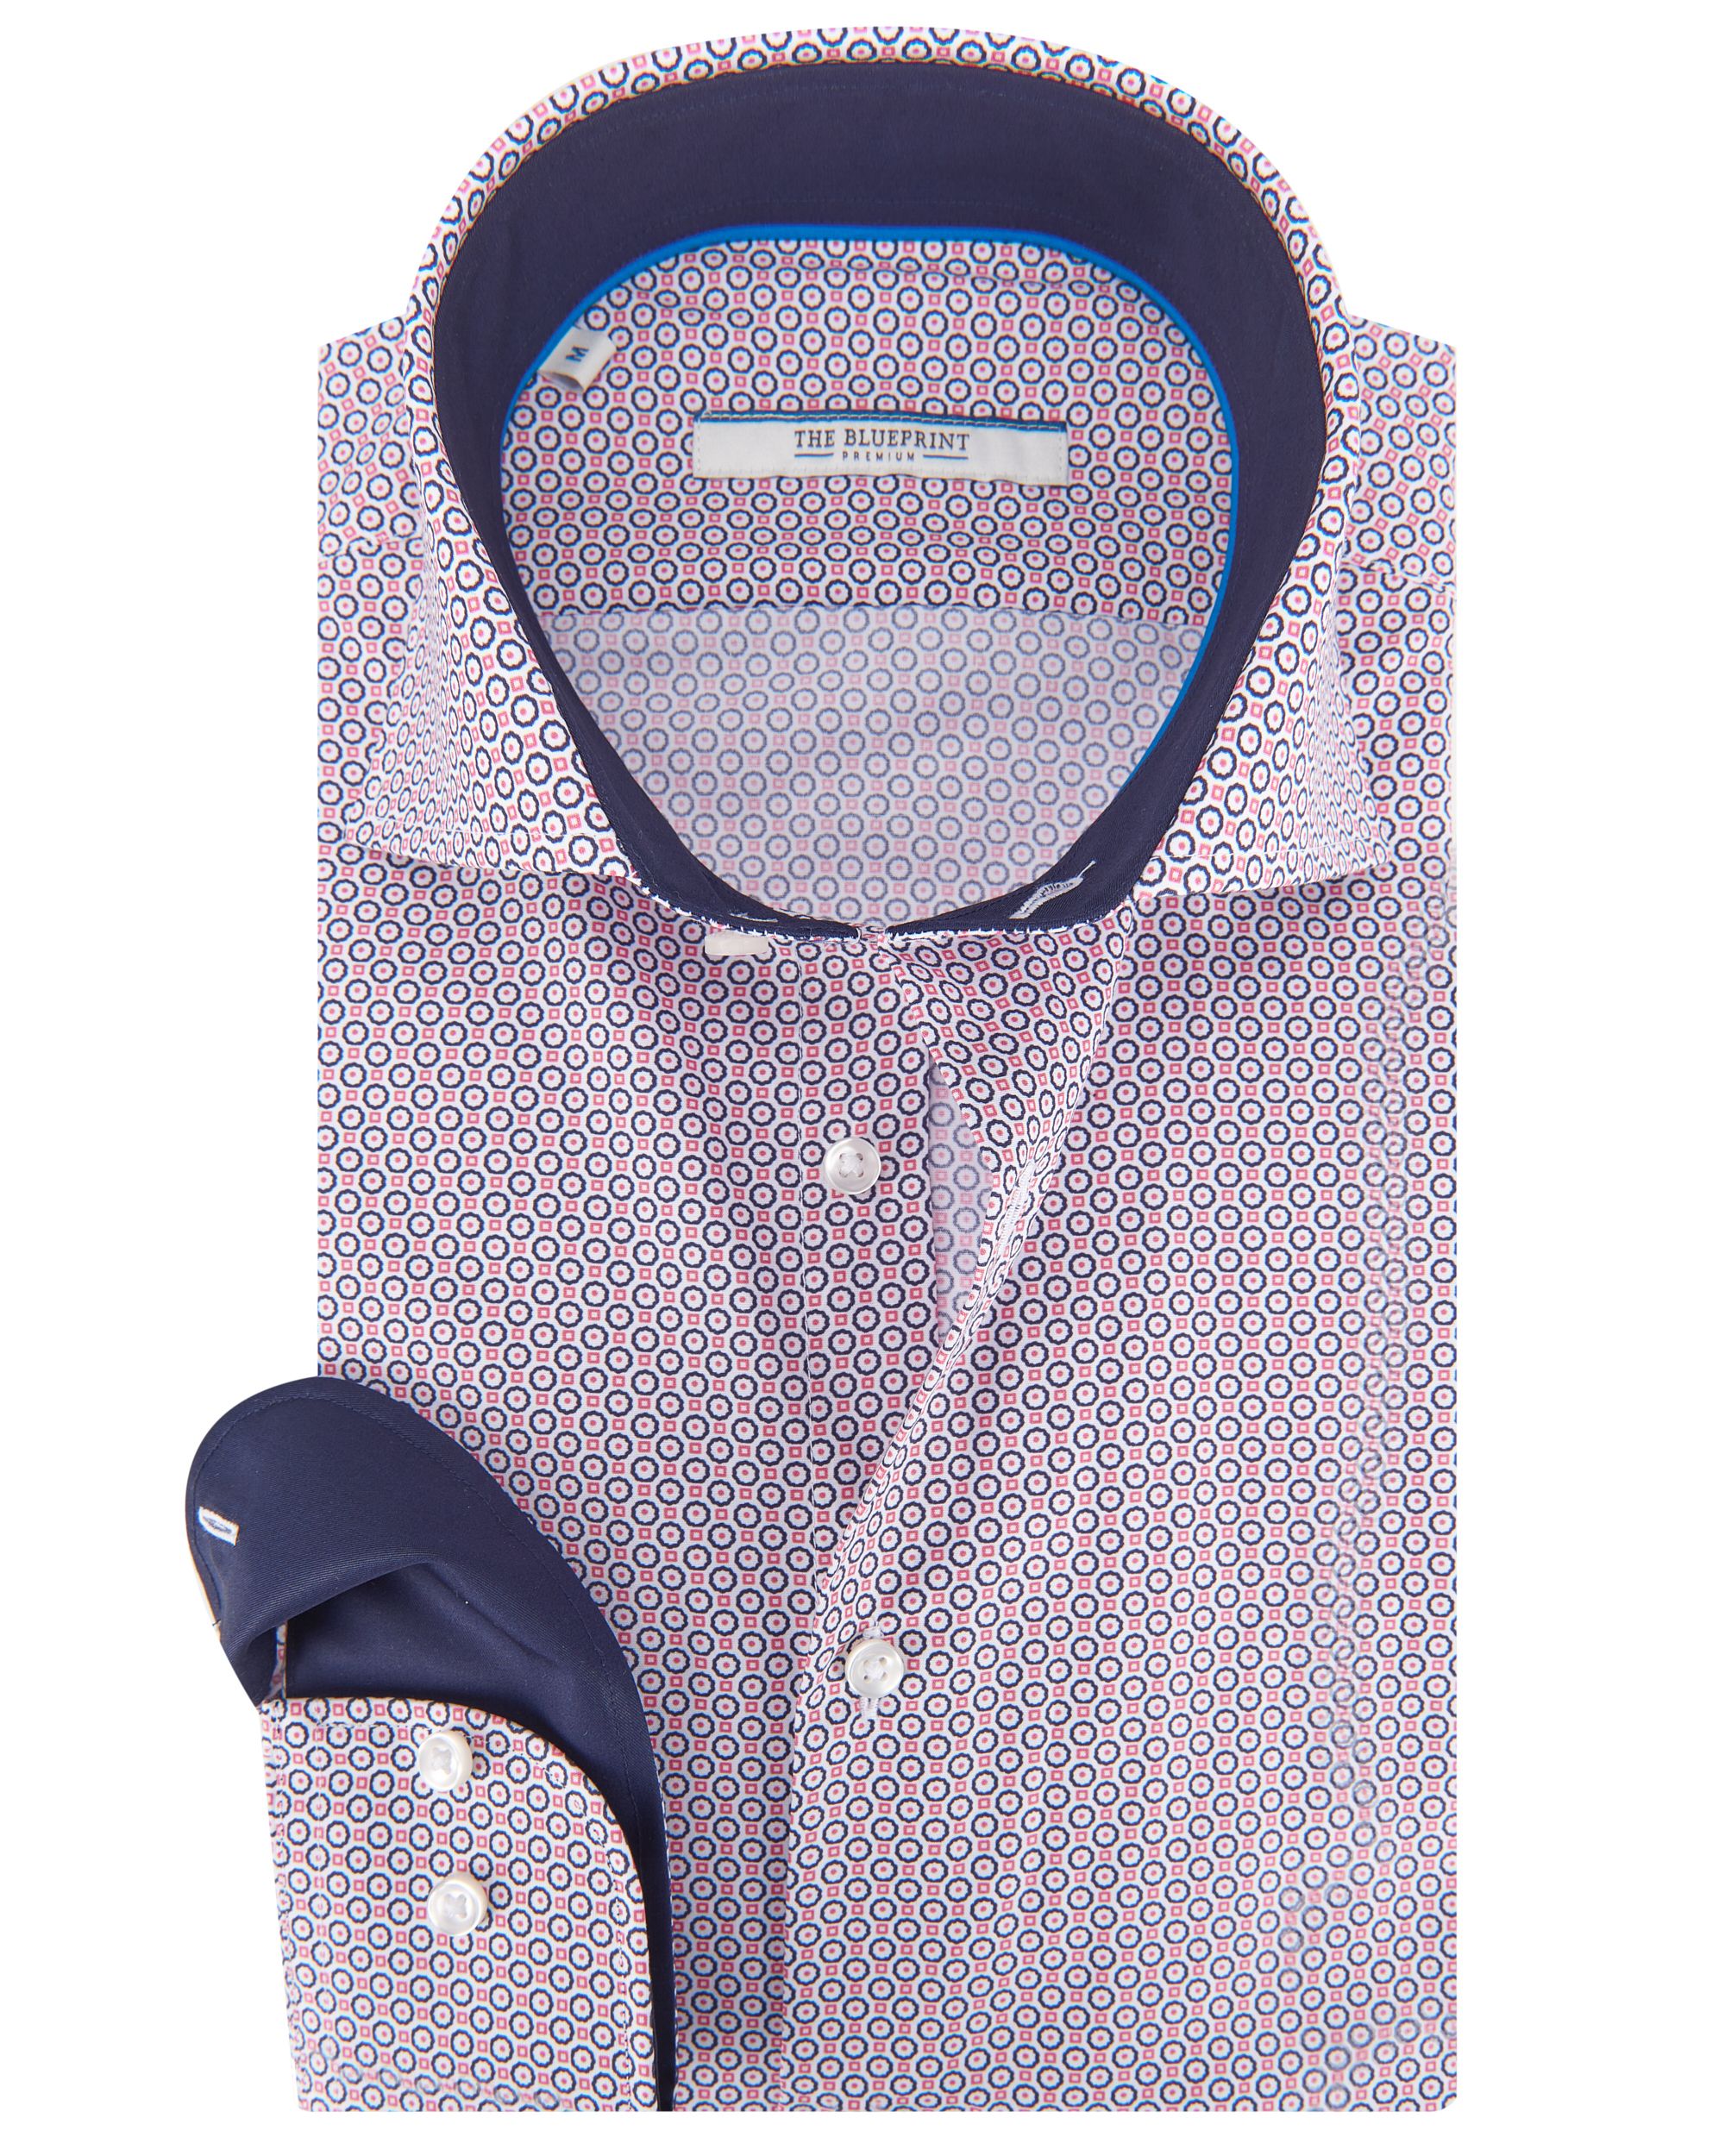 The BLUEPRINT Premium Trendy overhemd LM Lichtrood dessin 084475-001-L